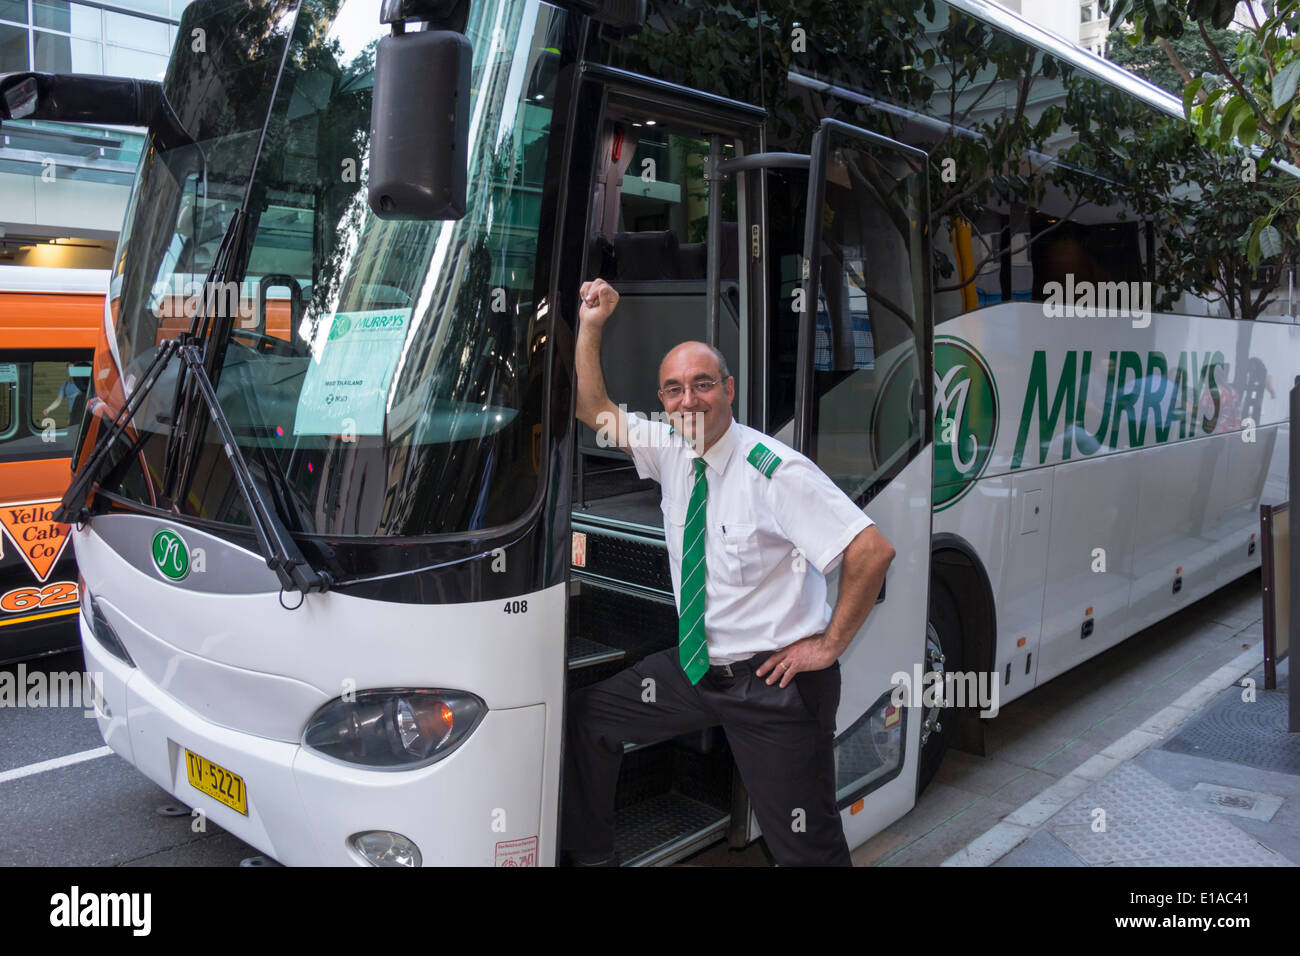 Brisbane Australien, Mary Street, Bus, Bus, Fahrer, Fahrer, Mann, Männer, lächelnd, AU140312096 Stockfoto